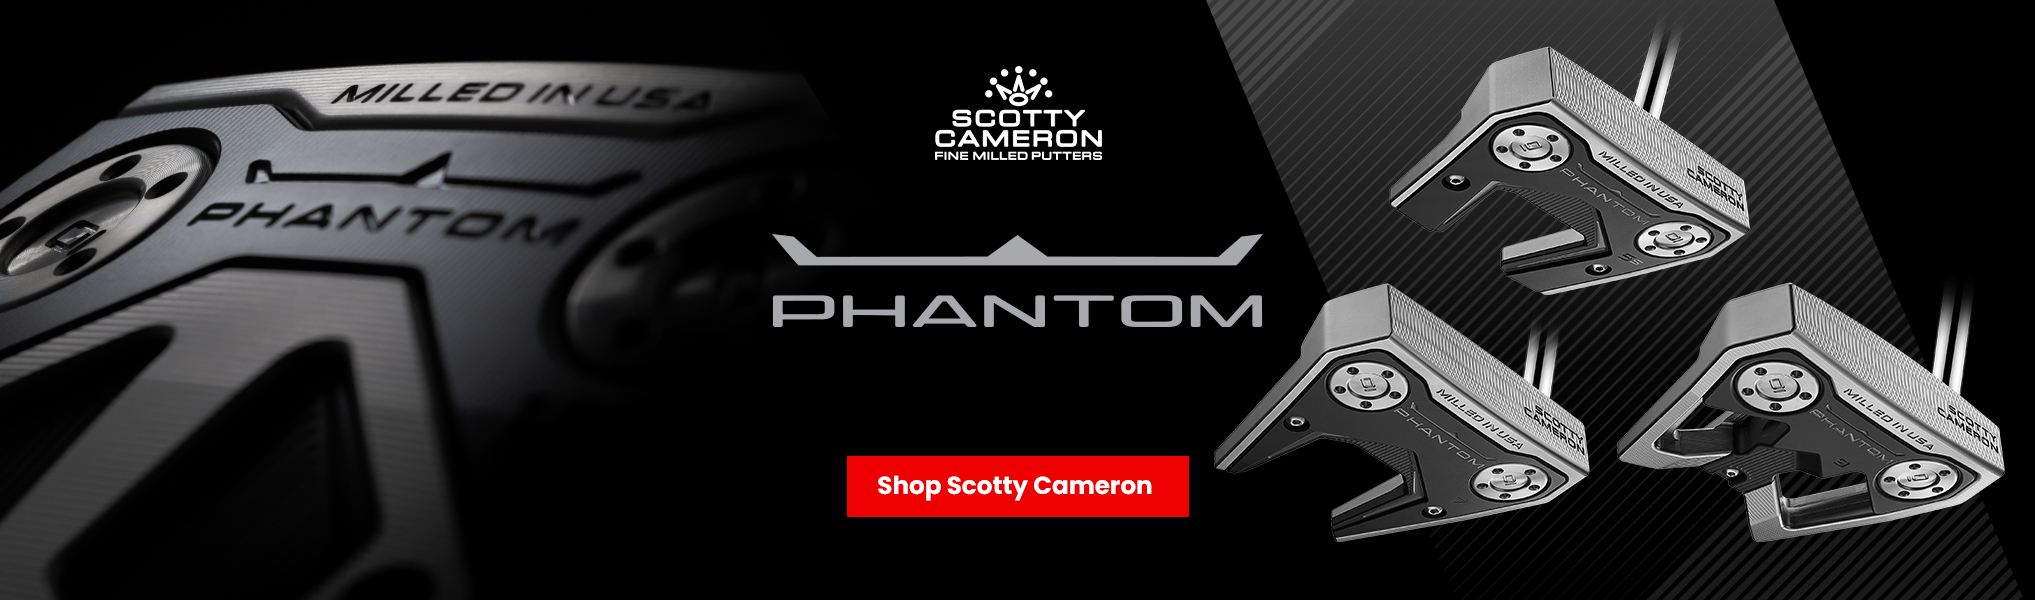 Scotty Cameron Phantom Putters